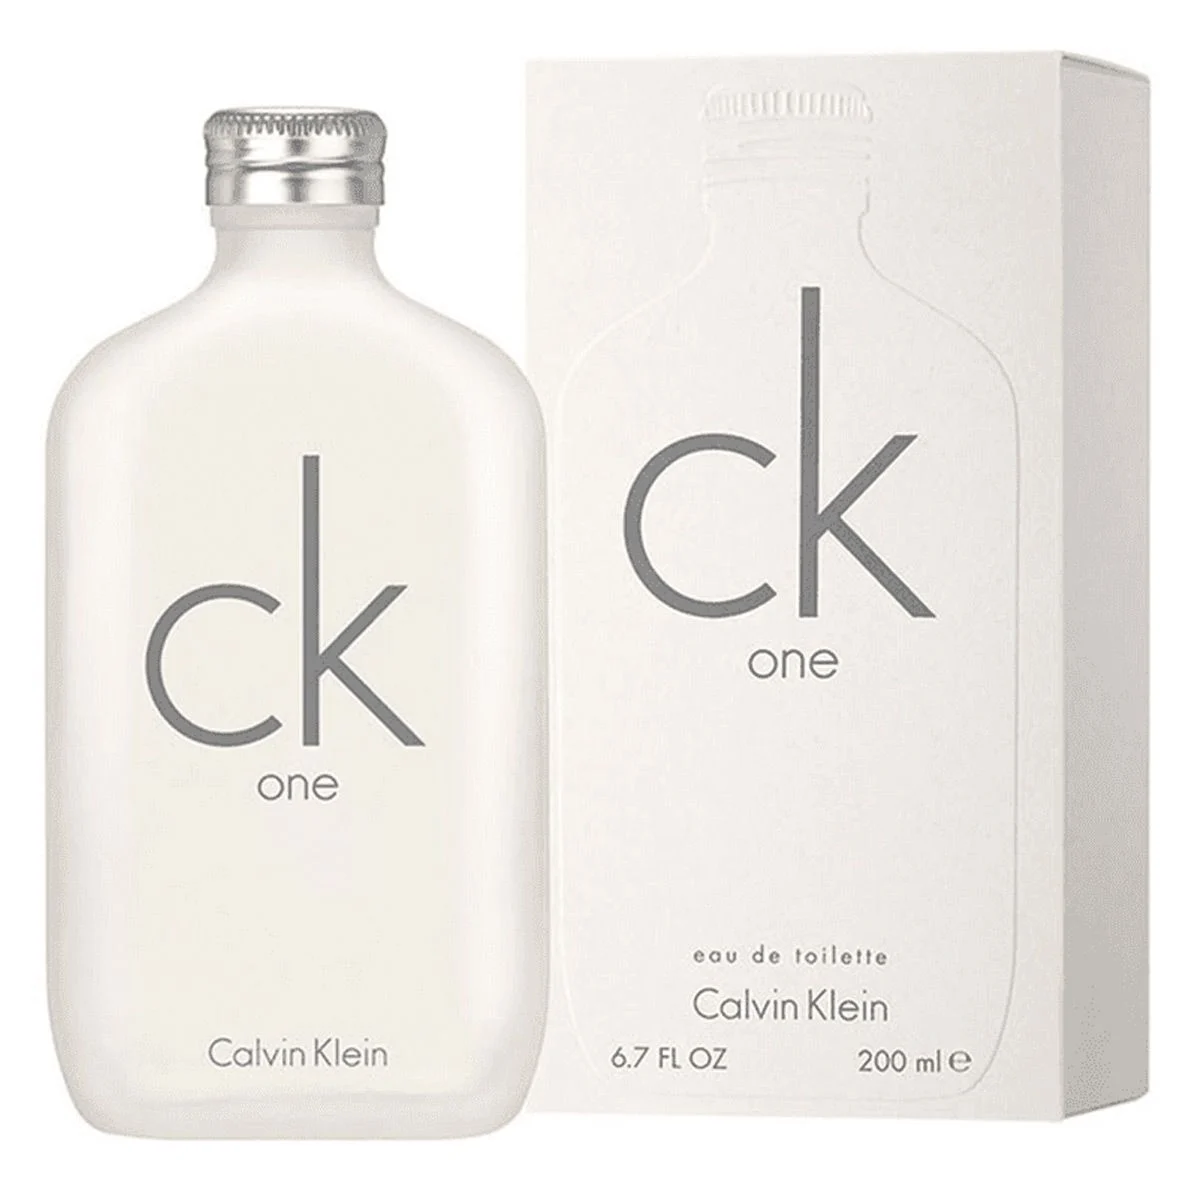 Hình 1 - Calvin Klein CK One EDT 200ml